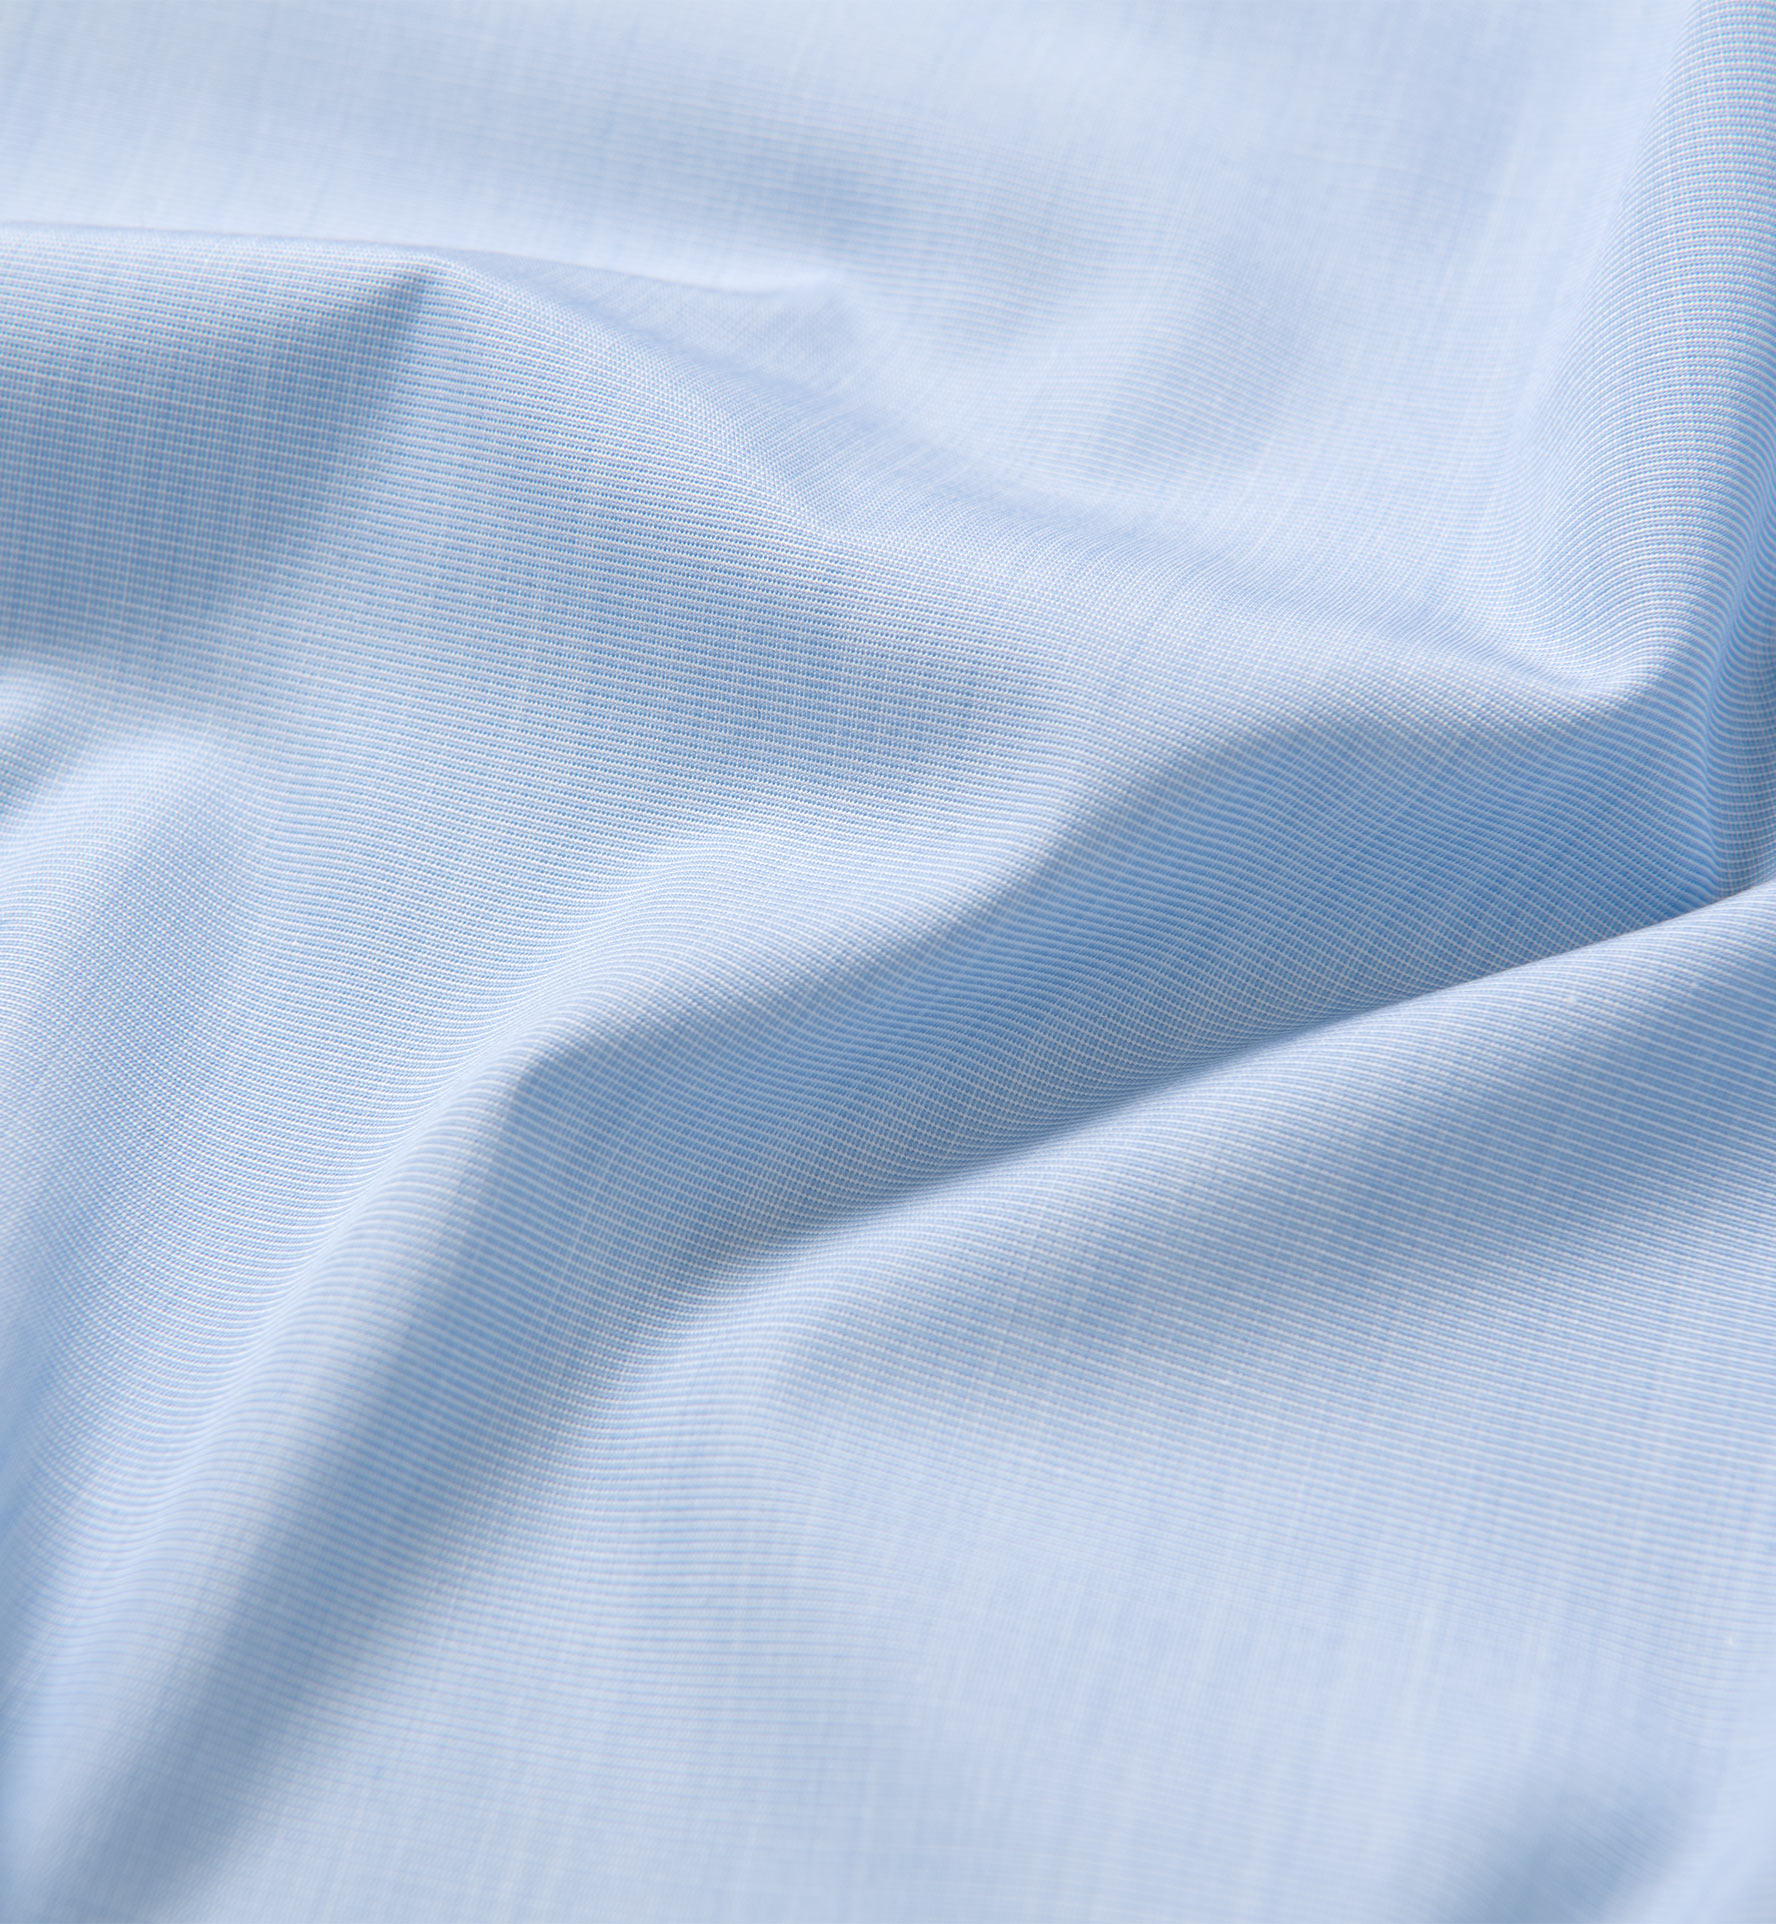 Thomas Mason Luxury Light Blue End-on-End Shirts by Proper Cloth